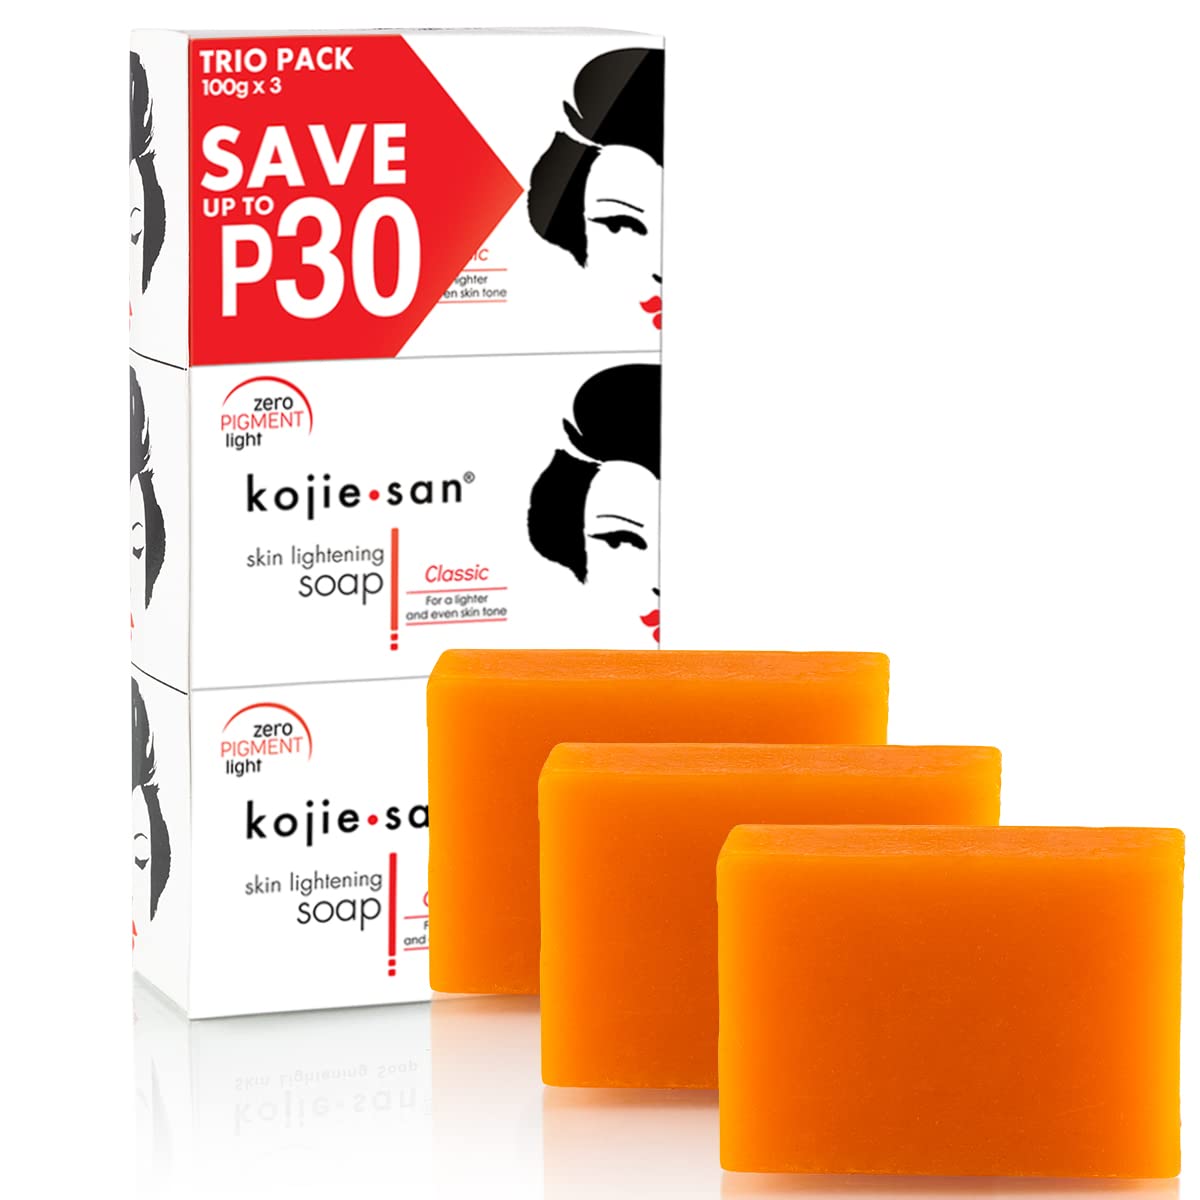 Original Kojie San Facial Beauty Soap - 65g, 2 Bars Per Pack - Guaranteed  Authentic